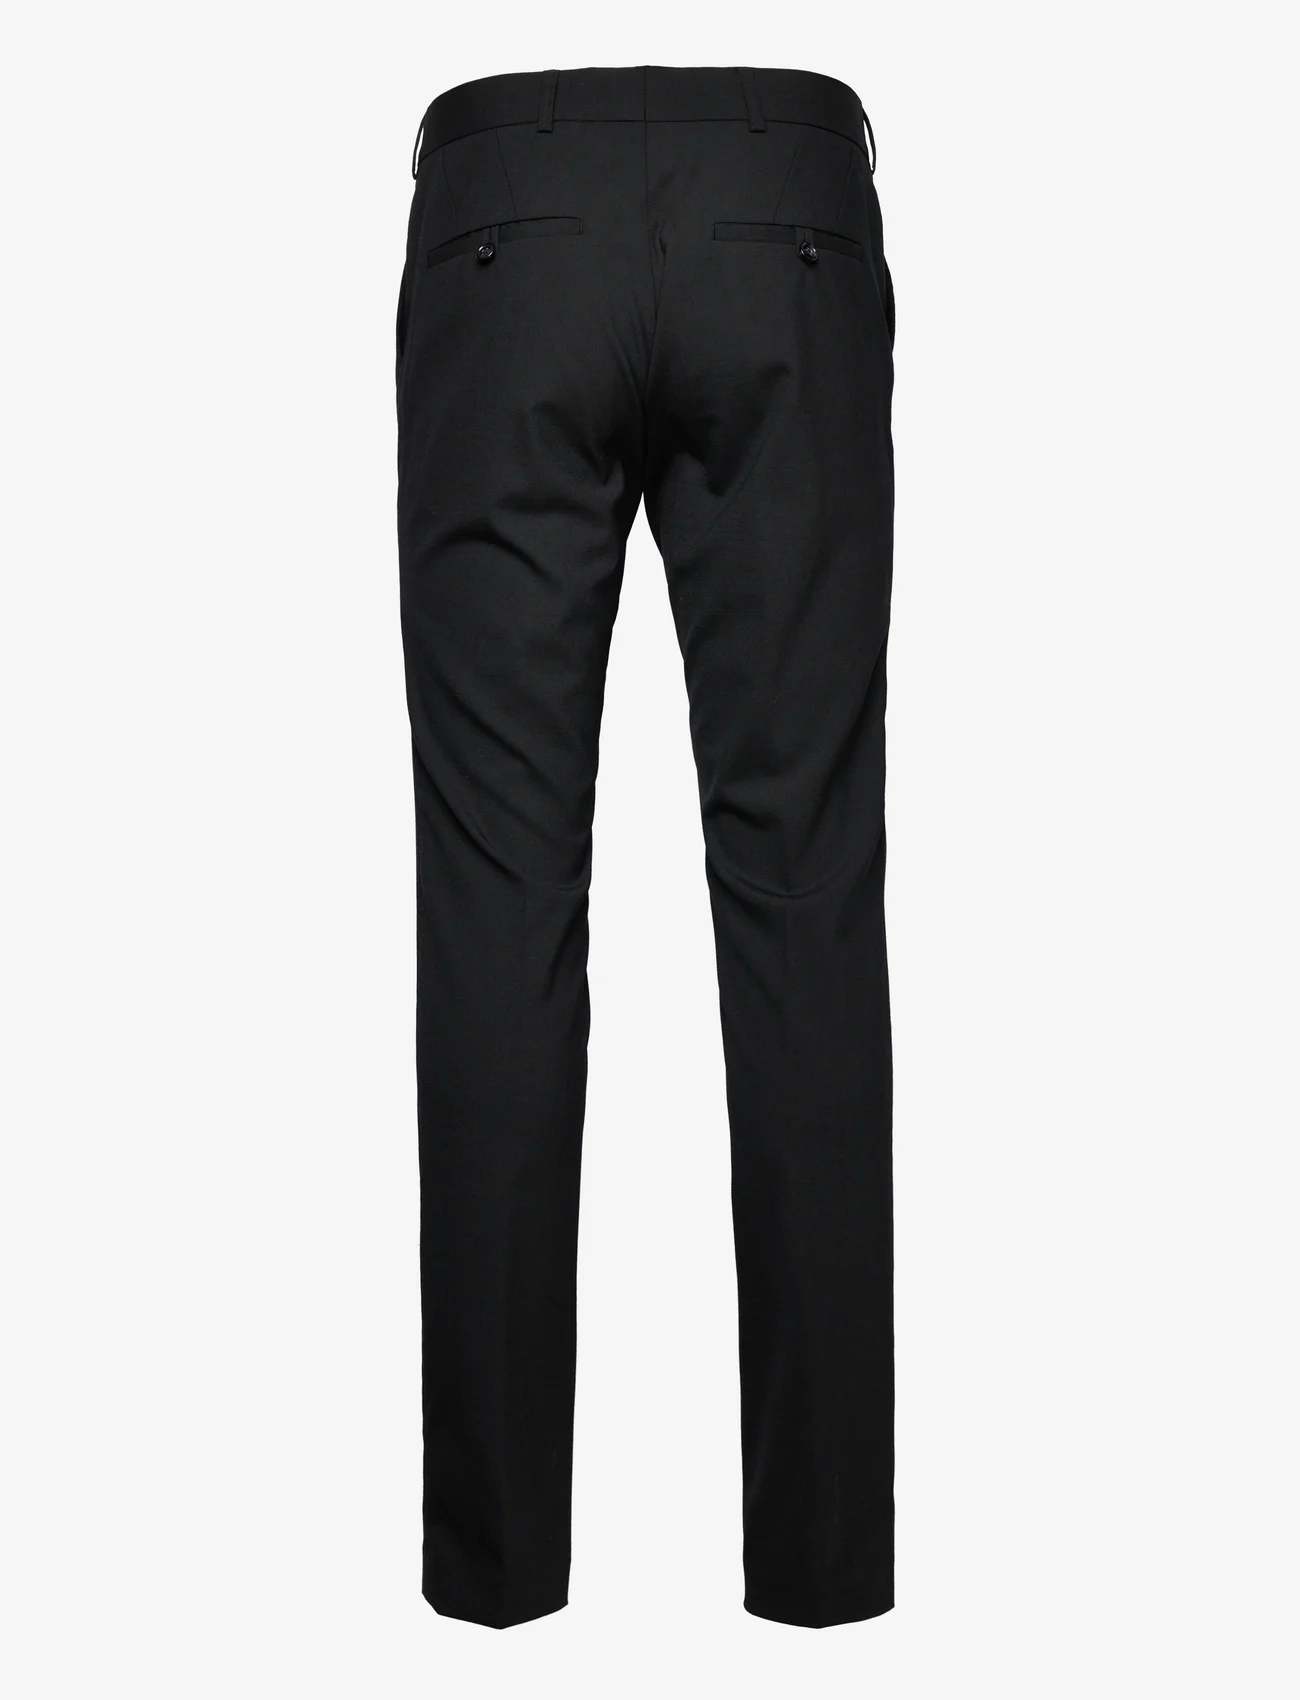 Bertoni - Knudsen - suit trousers - 997 jet black - 1